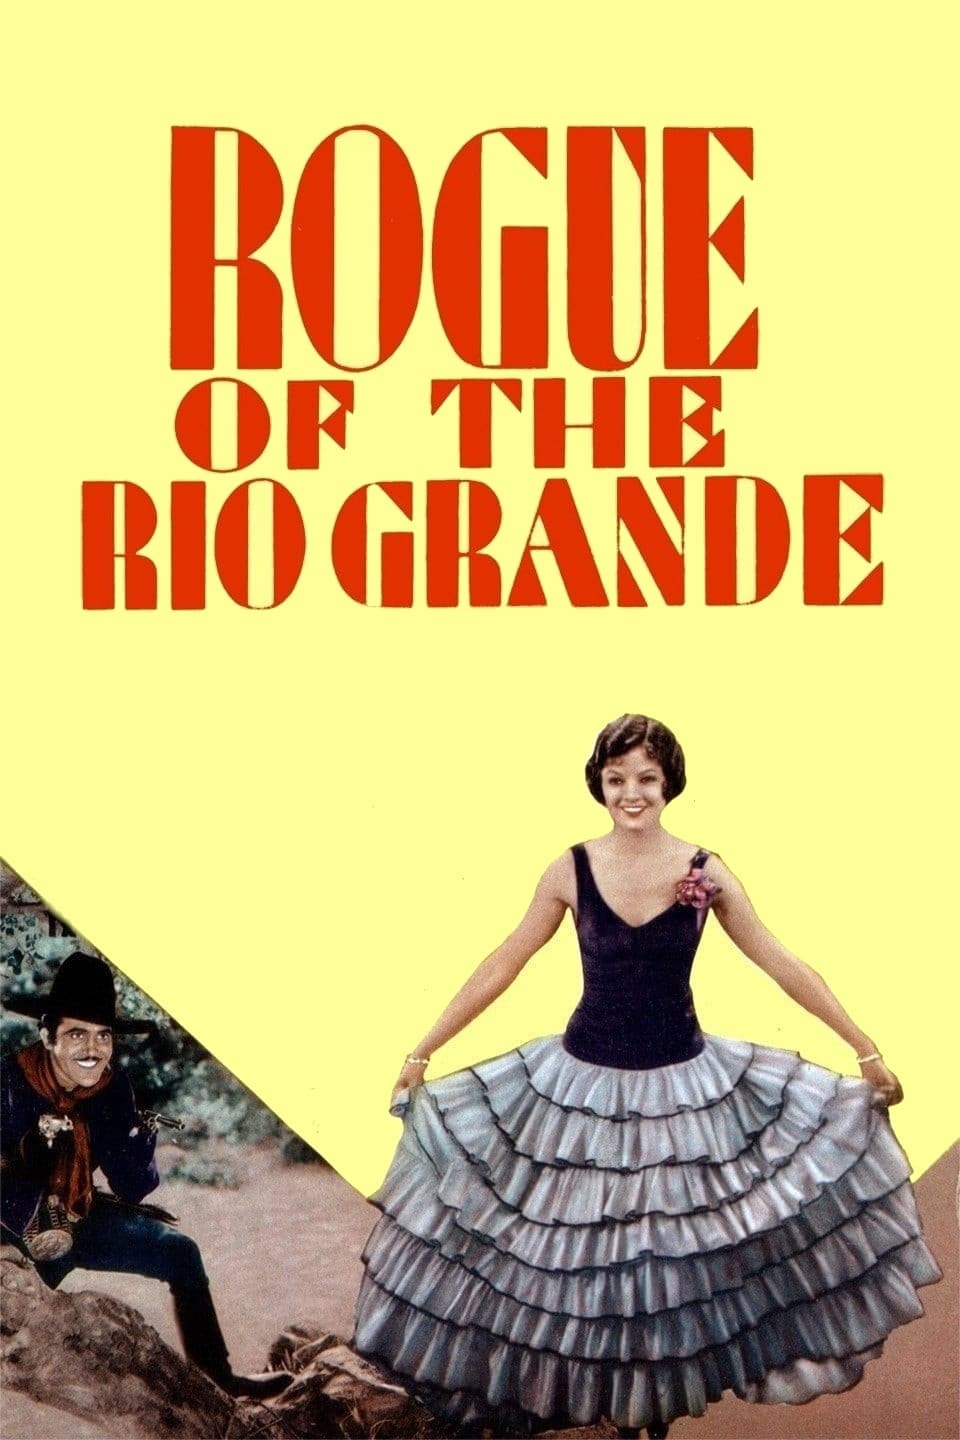 Rogue of the Rio Grande (1930)